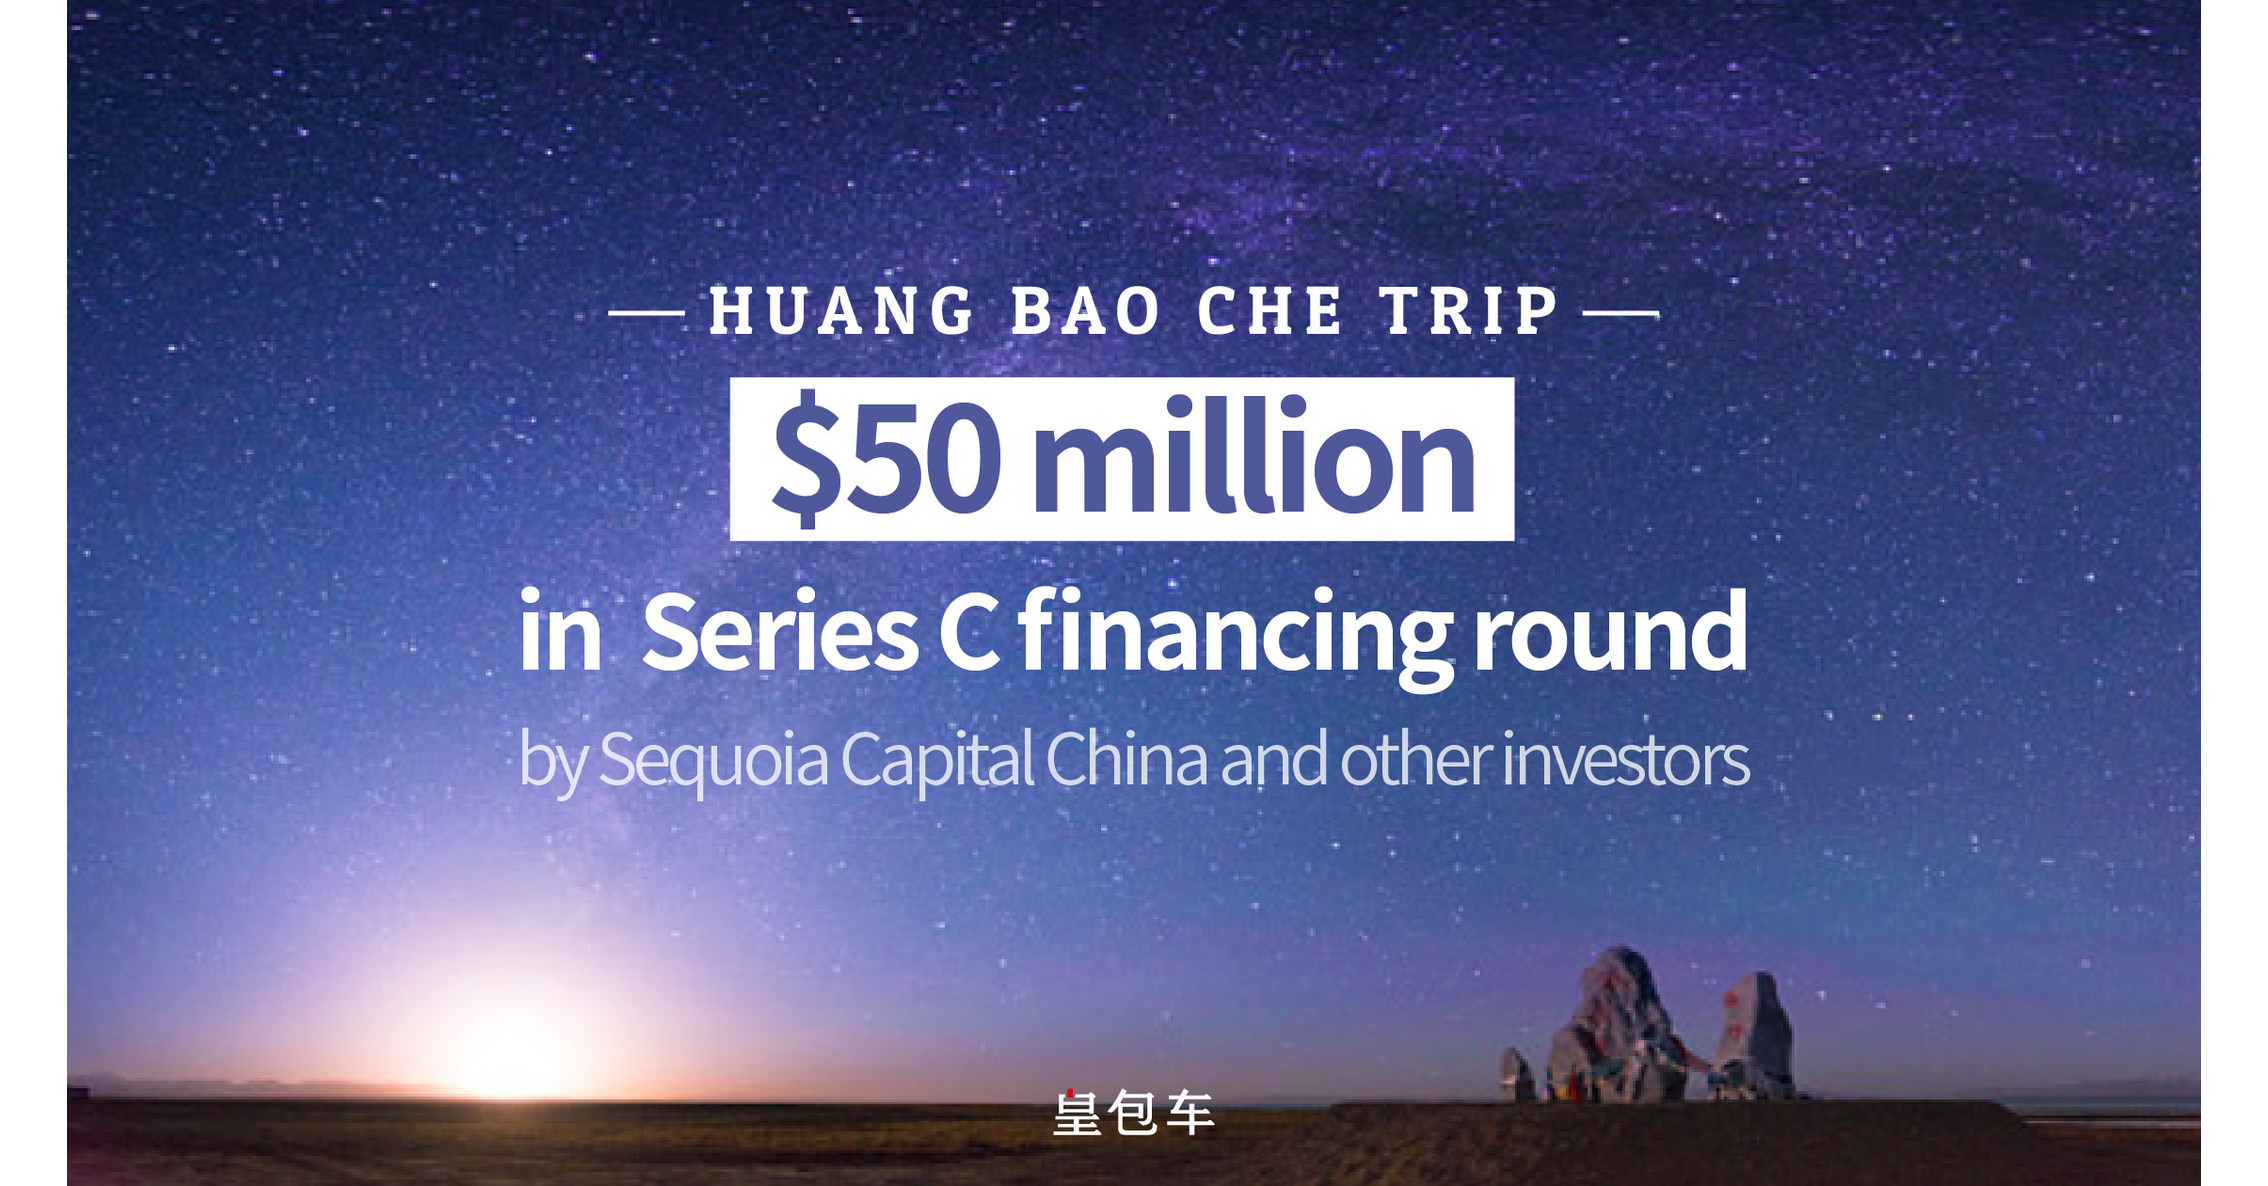 Huang Bao Che Trip funding jpg?p=facebook.